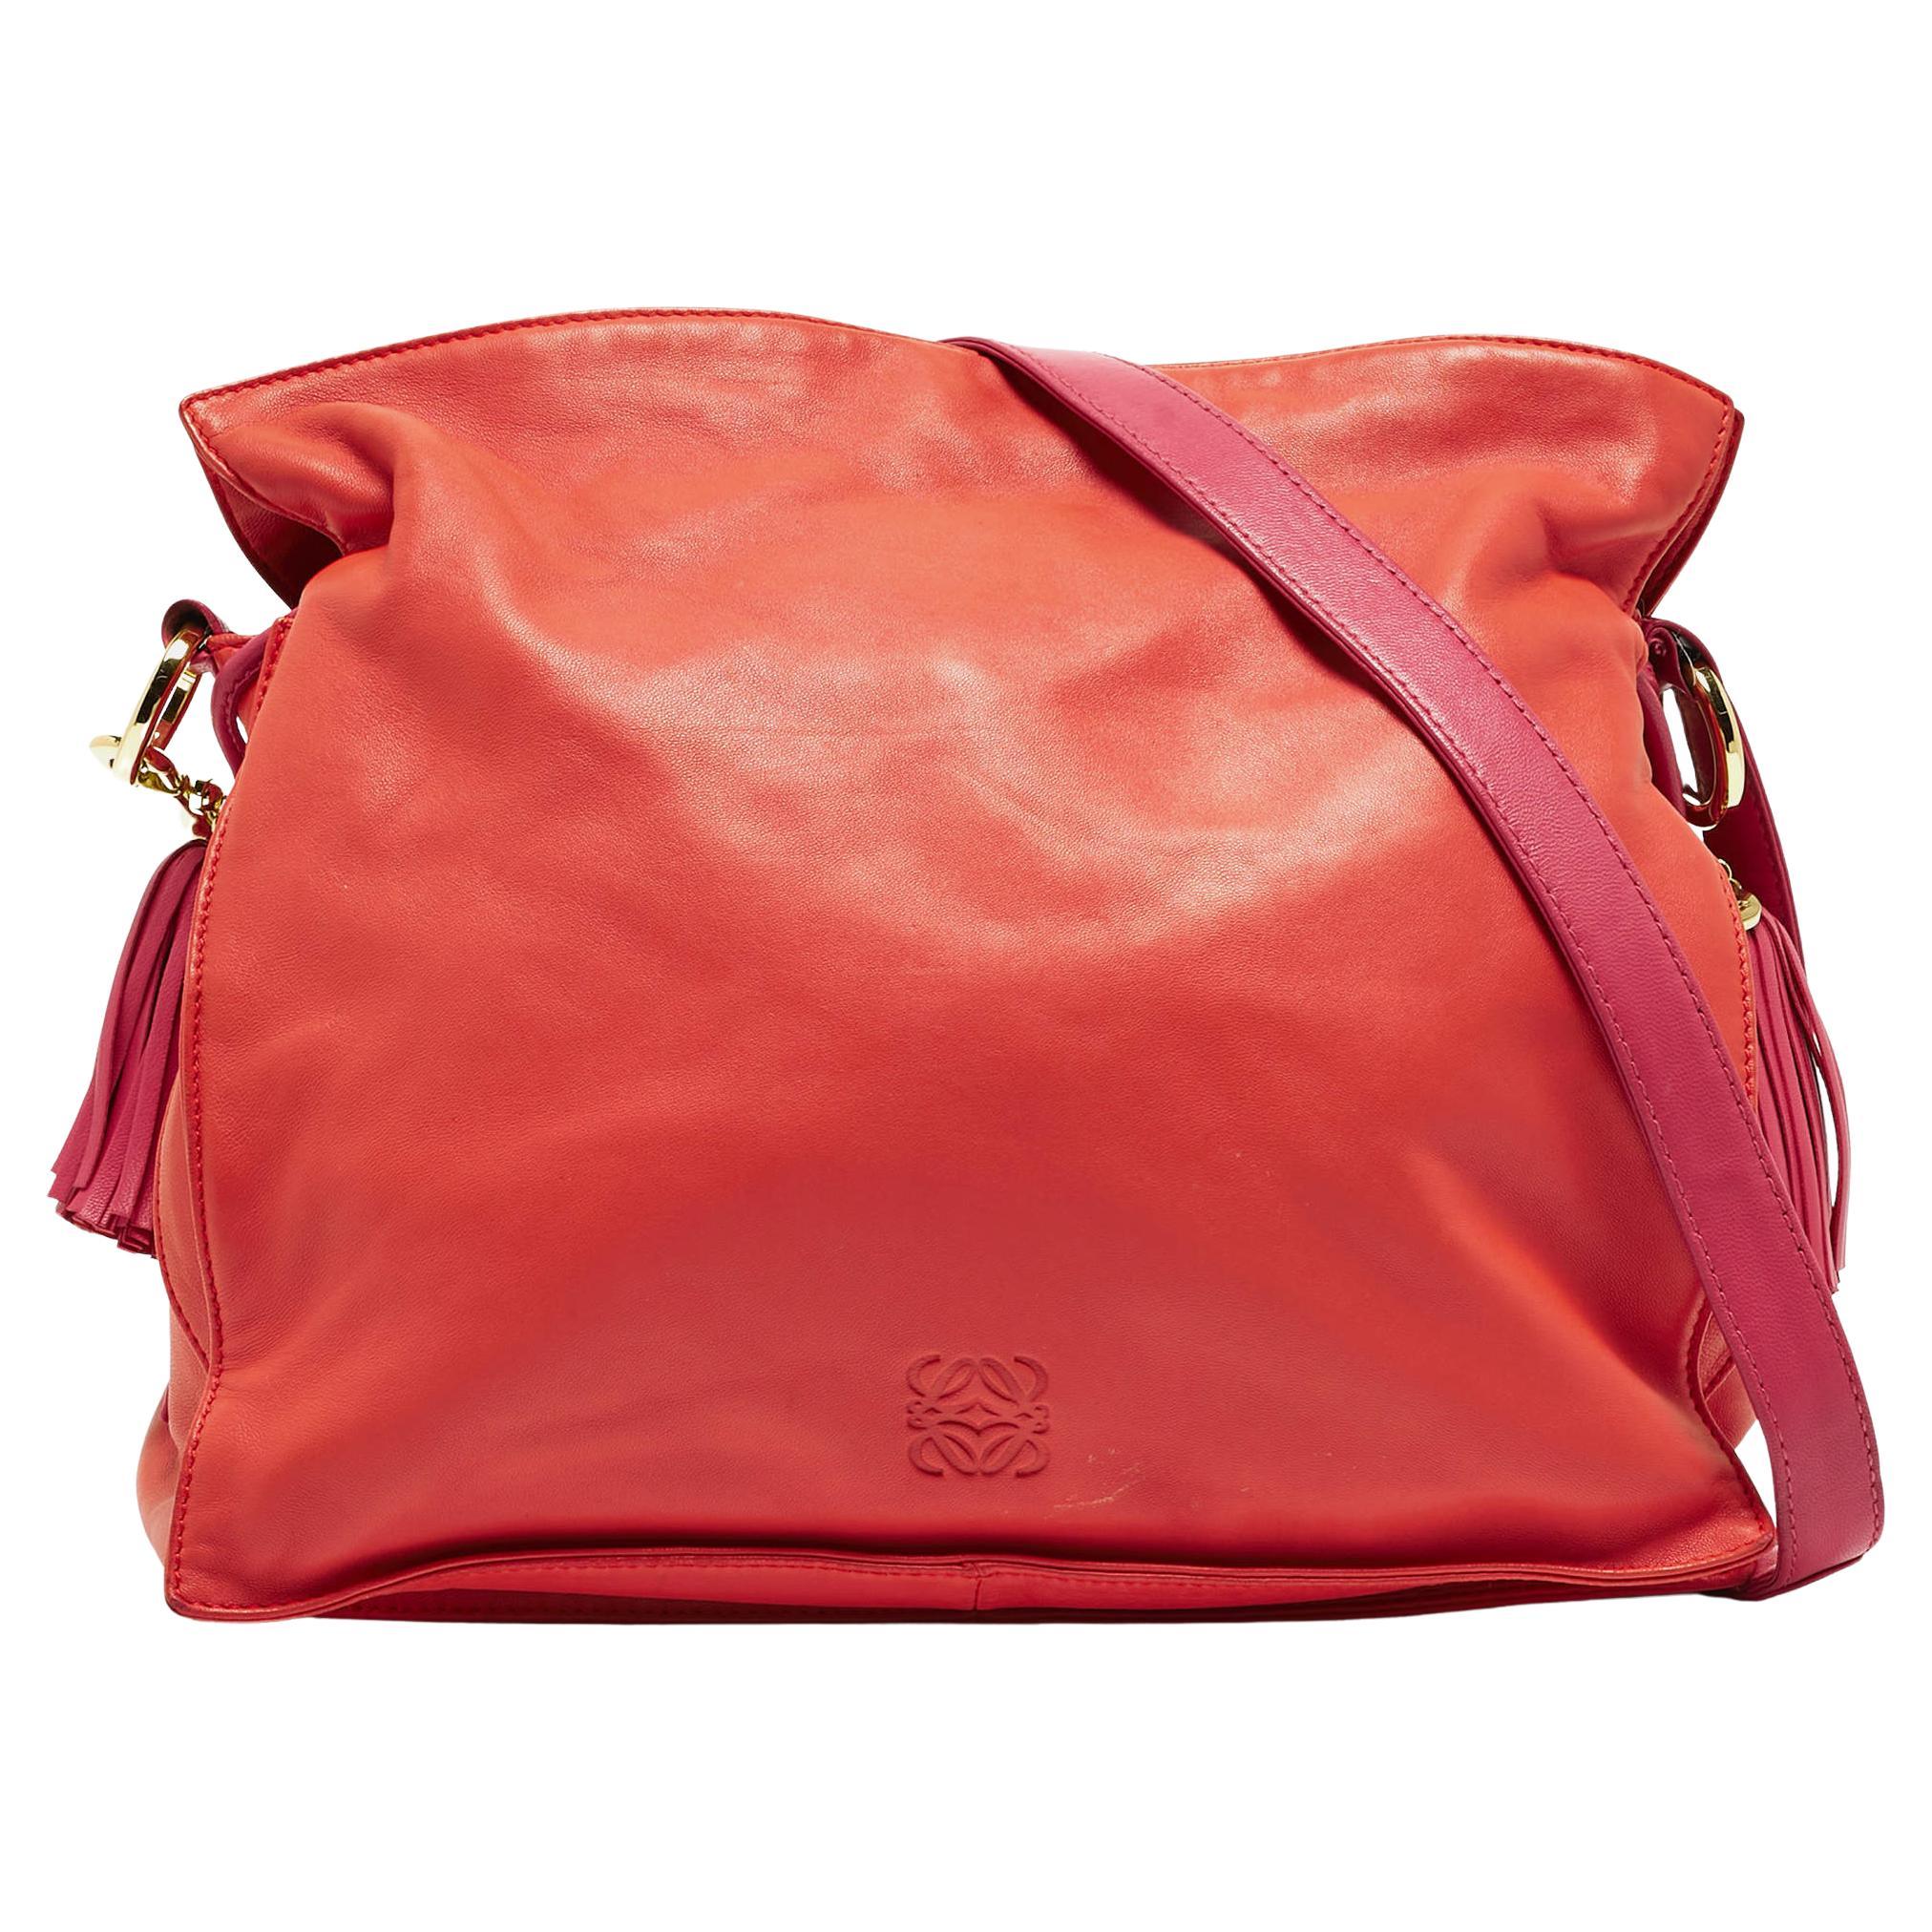 Loewe Coral Red/Magenta Leather Flamenco Shoulder Bag